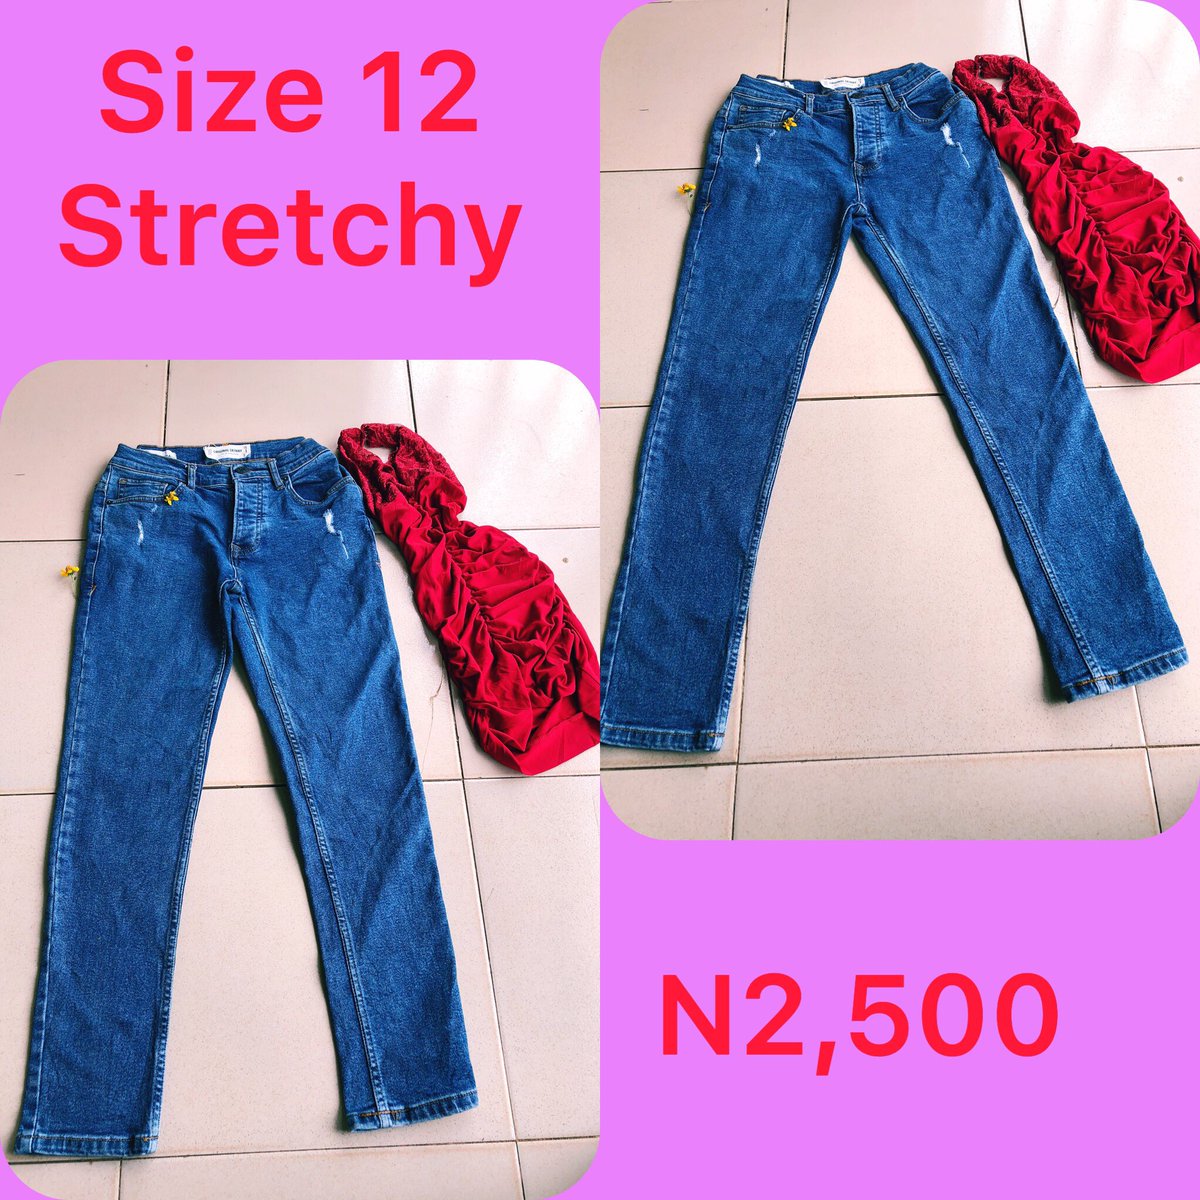 Slide 1: bf jeans      Size 10, N2,500Slide 2: bf jeans       Size 16, Price: N2,500Slide 3: bf jeans       Size 12, Price: N2,500Slide 4: skinny jeans       Size 12, Price N2,500